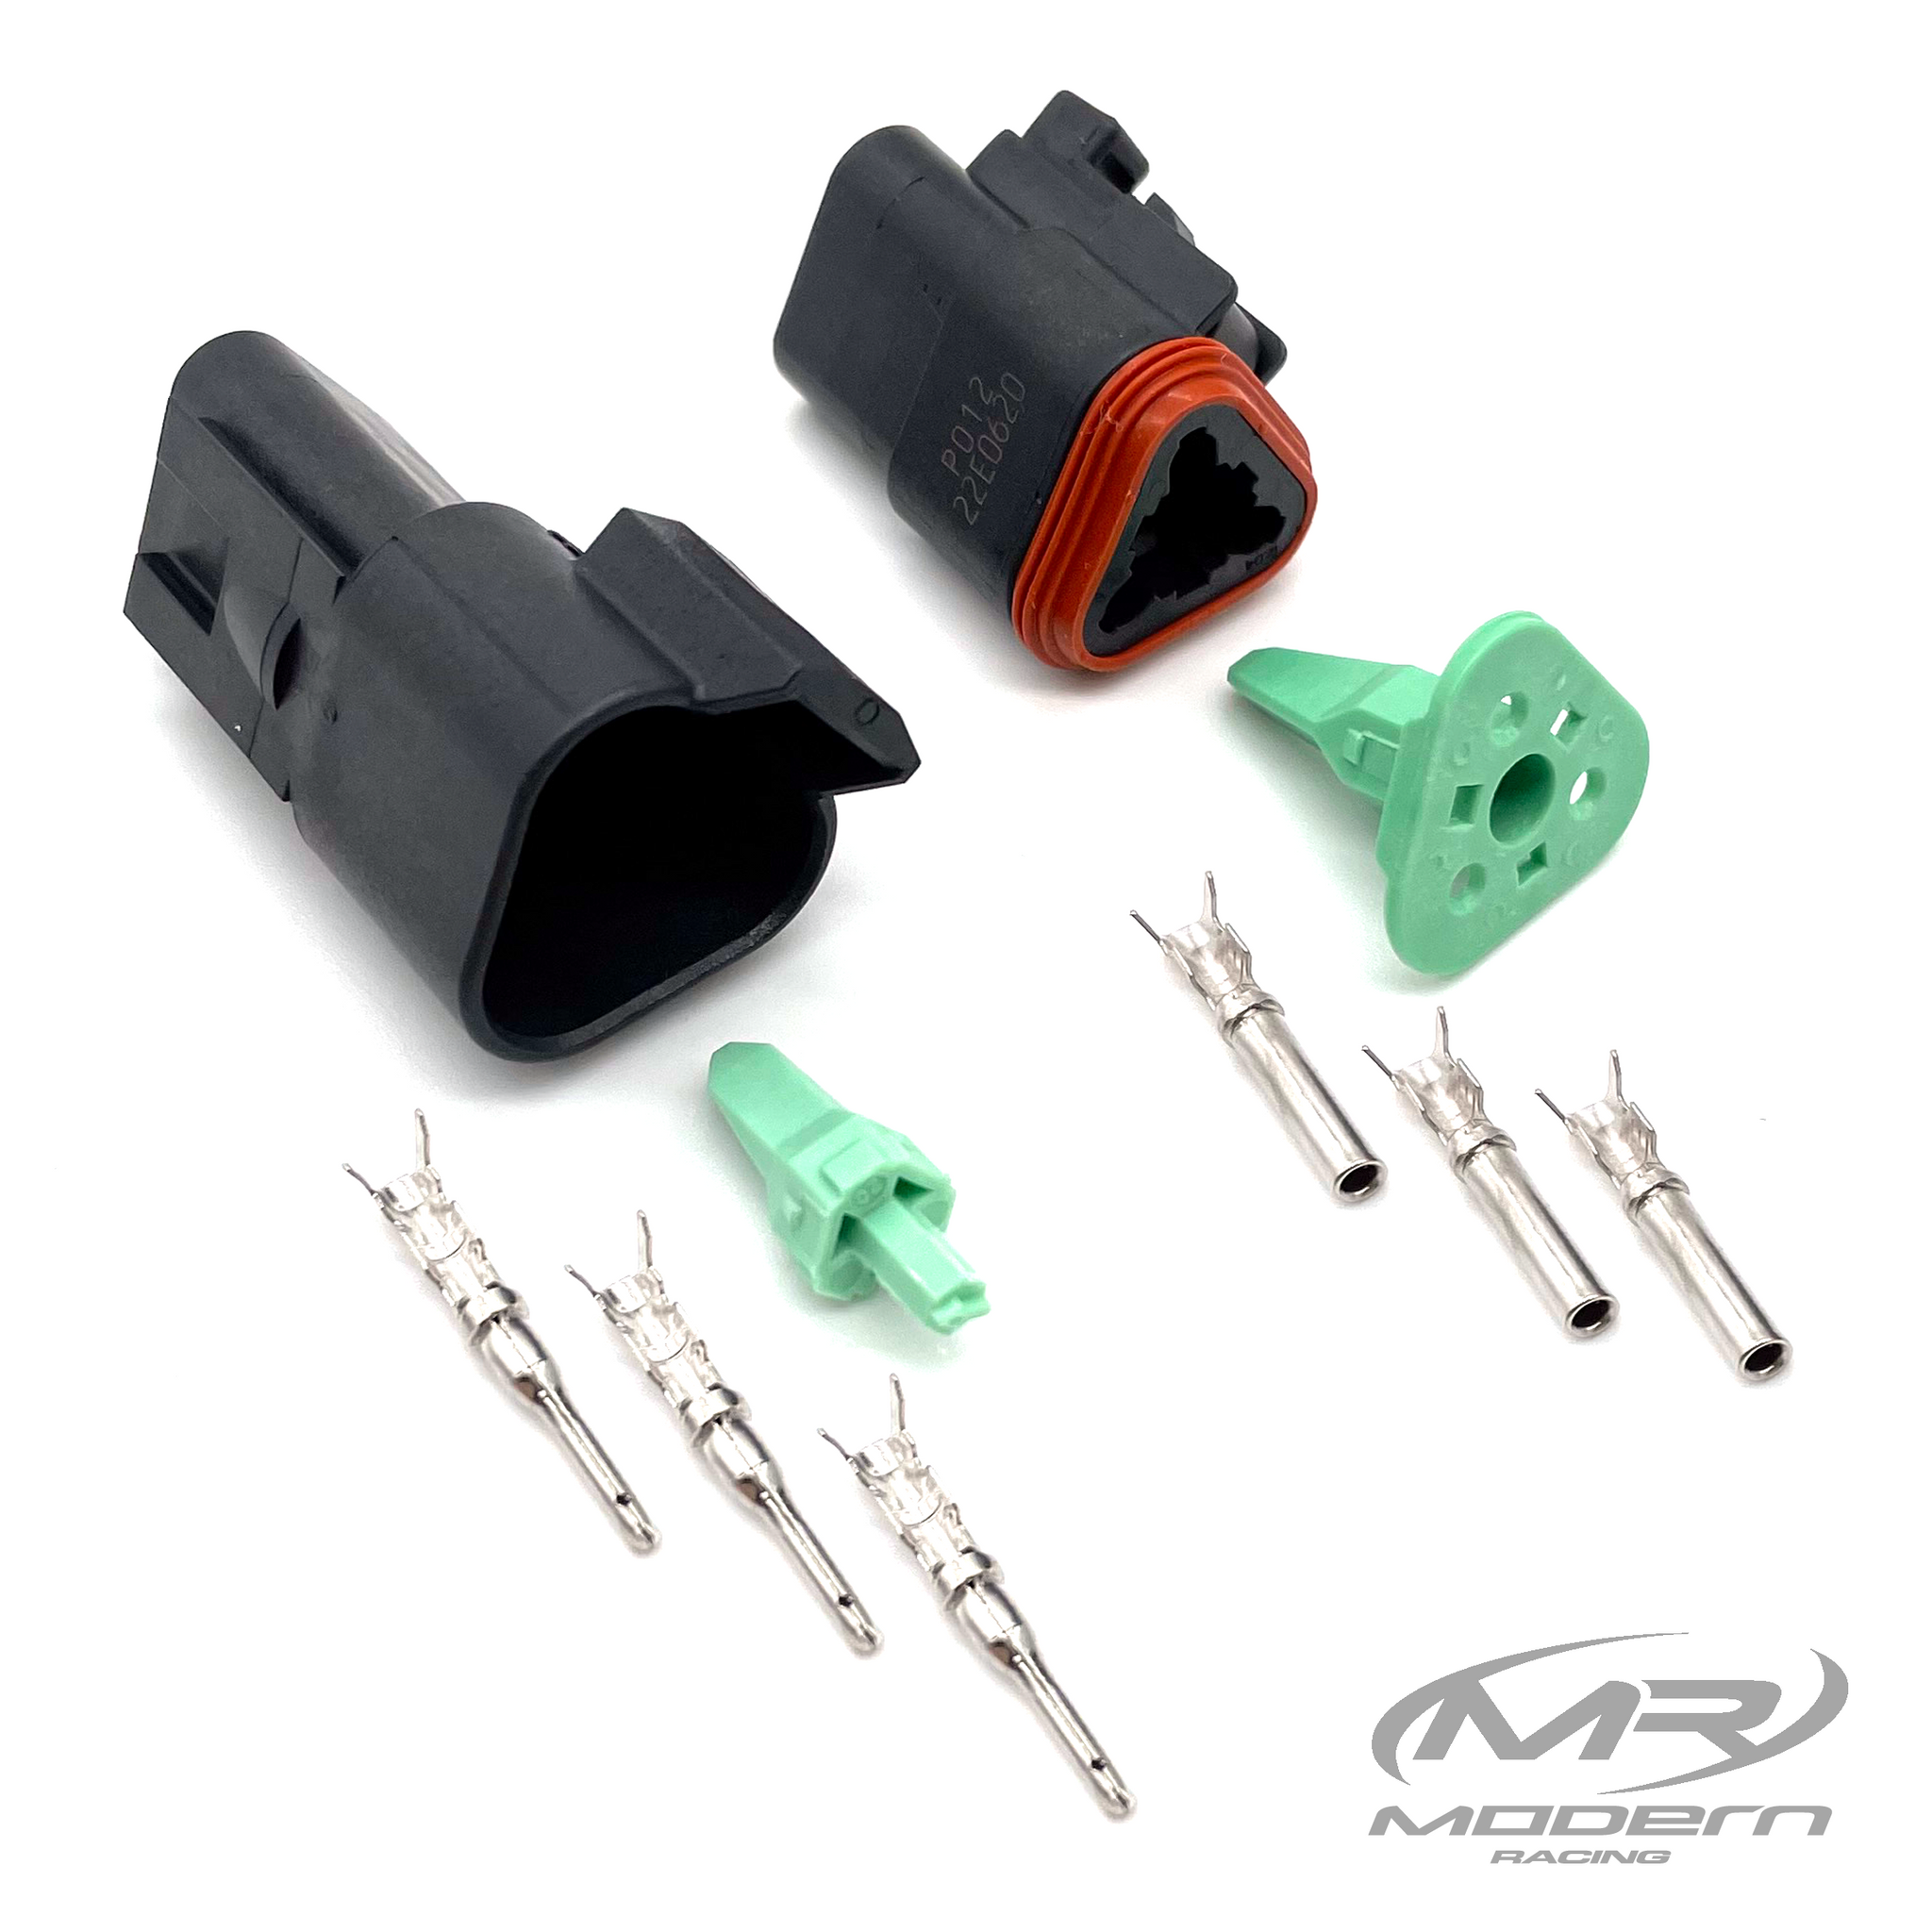 Deutsch DT 3 Socket/Pin Mating Pair Connector Kit (Black)